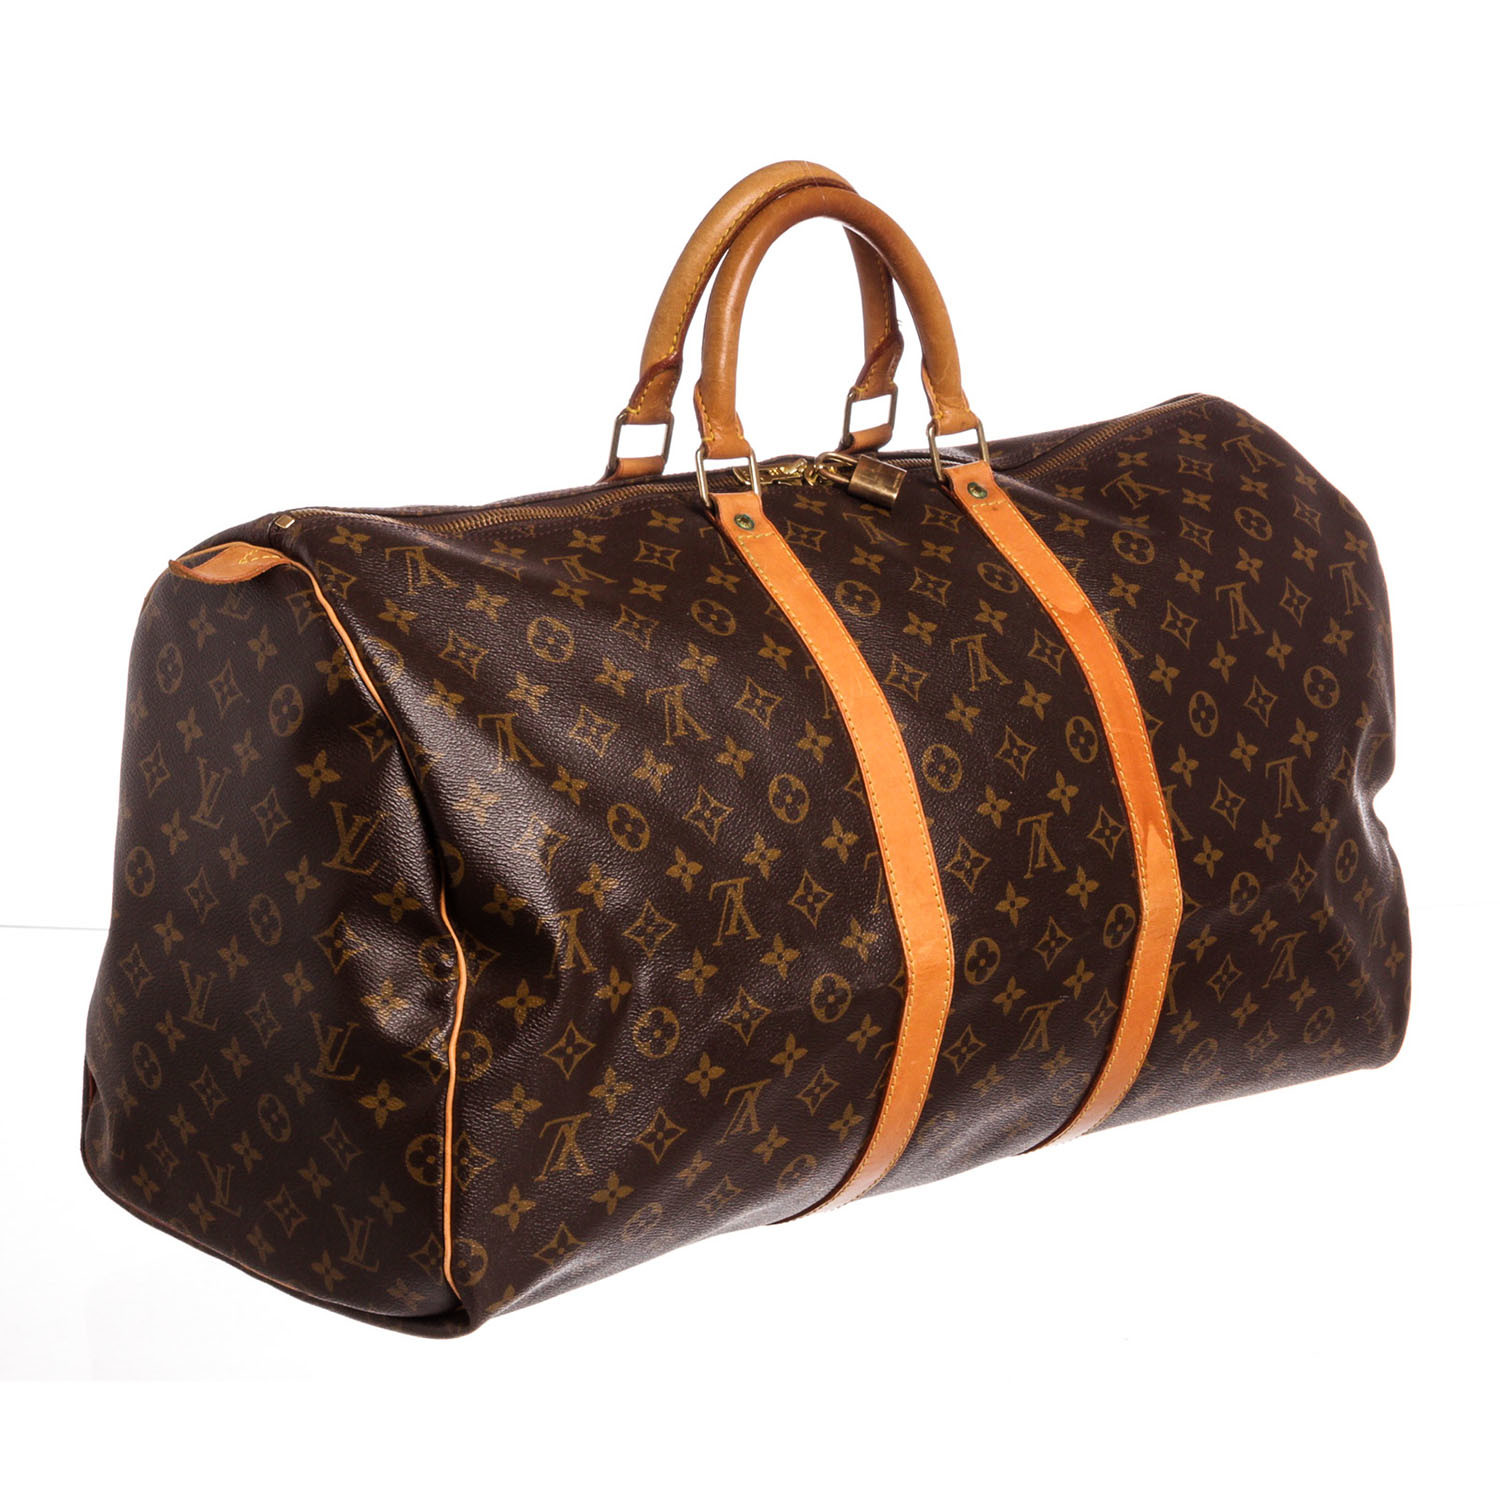 Louis Vuitton 55 Duffle Bag Price